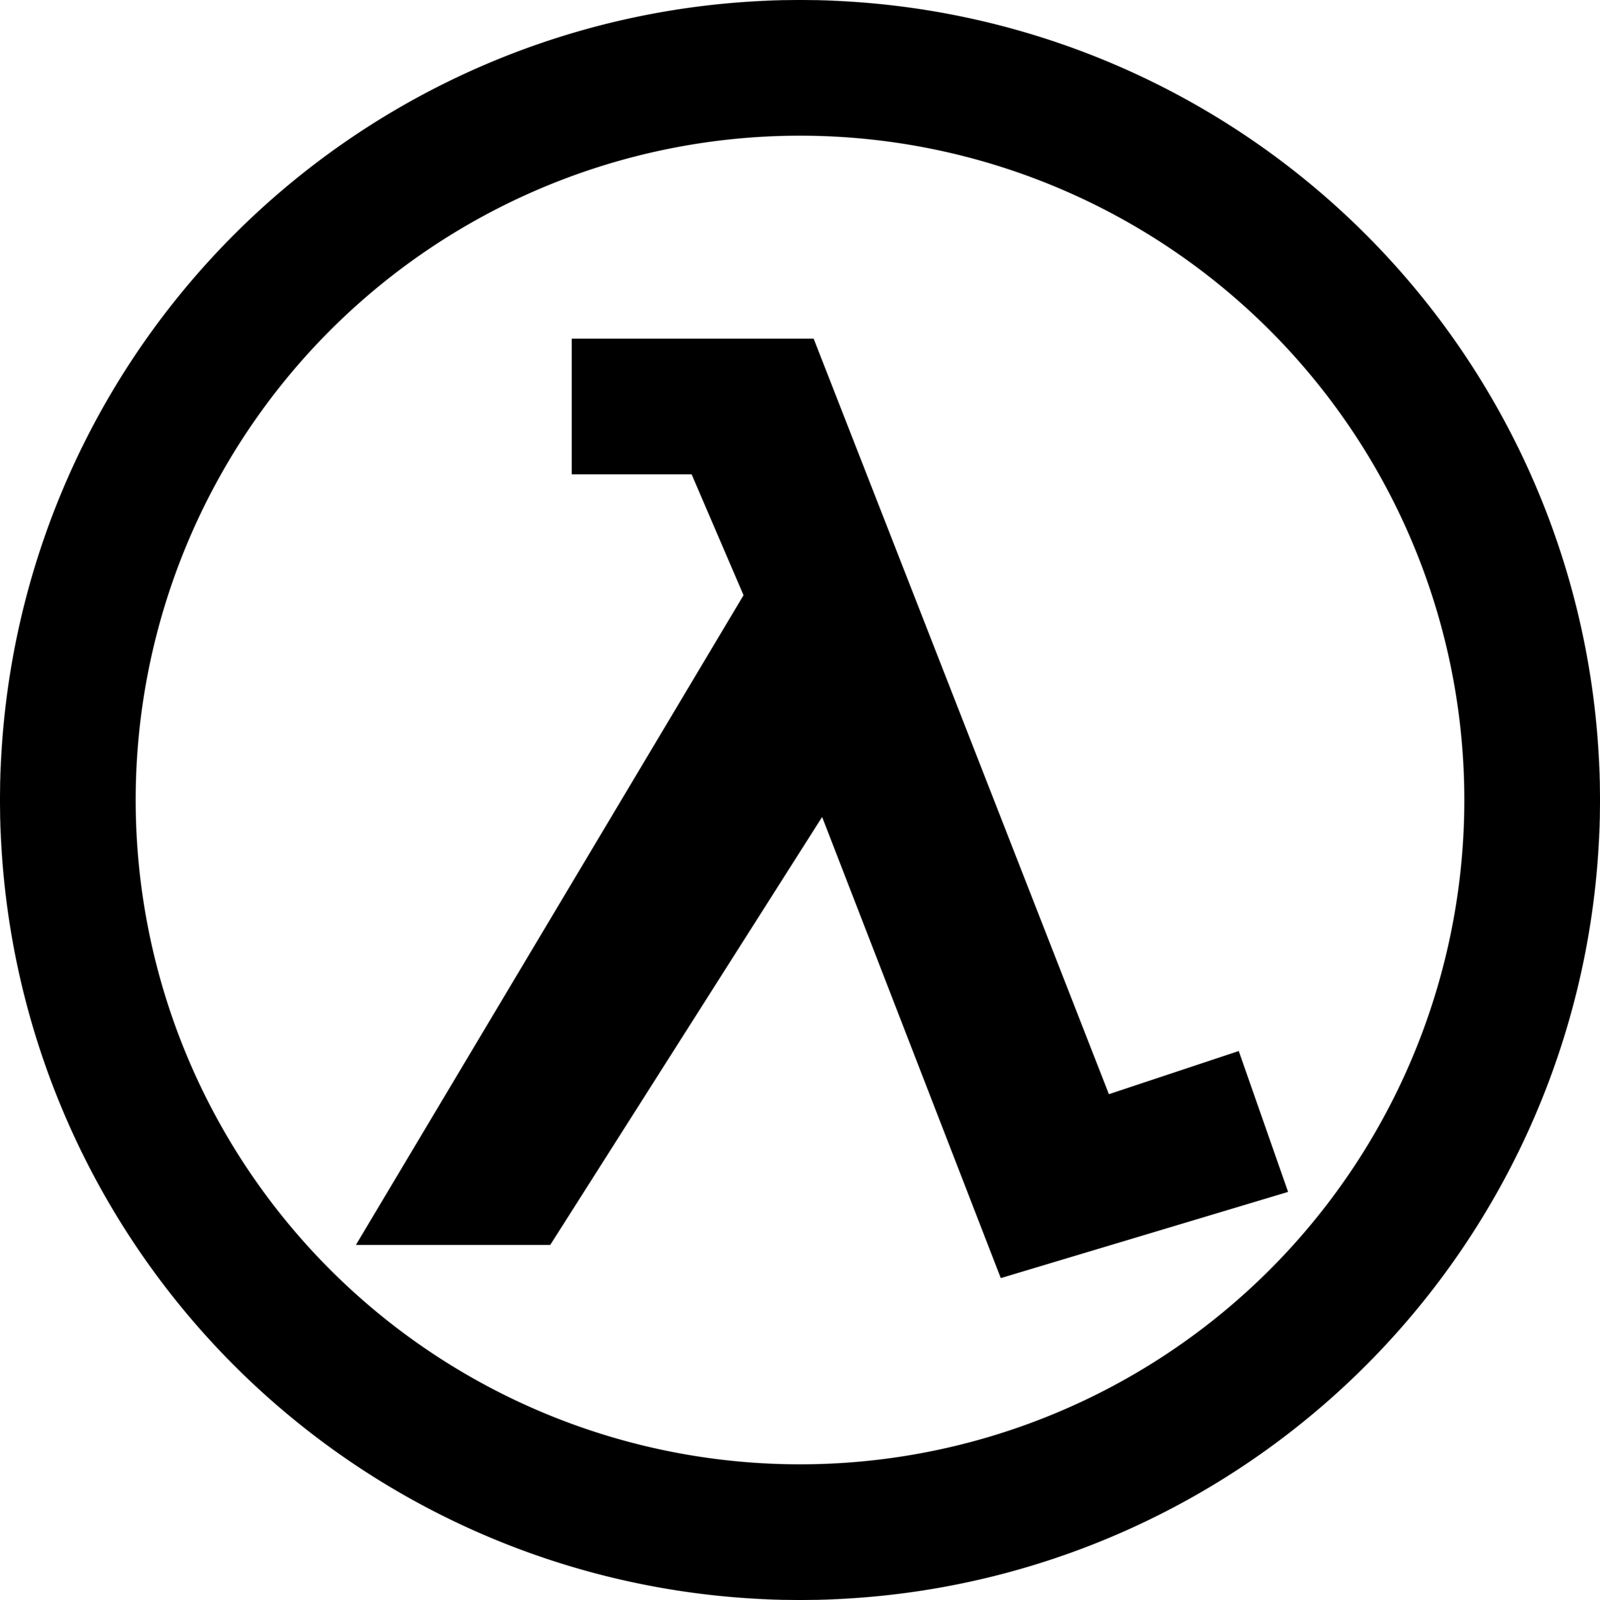 Half-Life logo.png